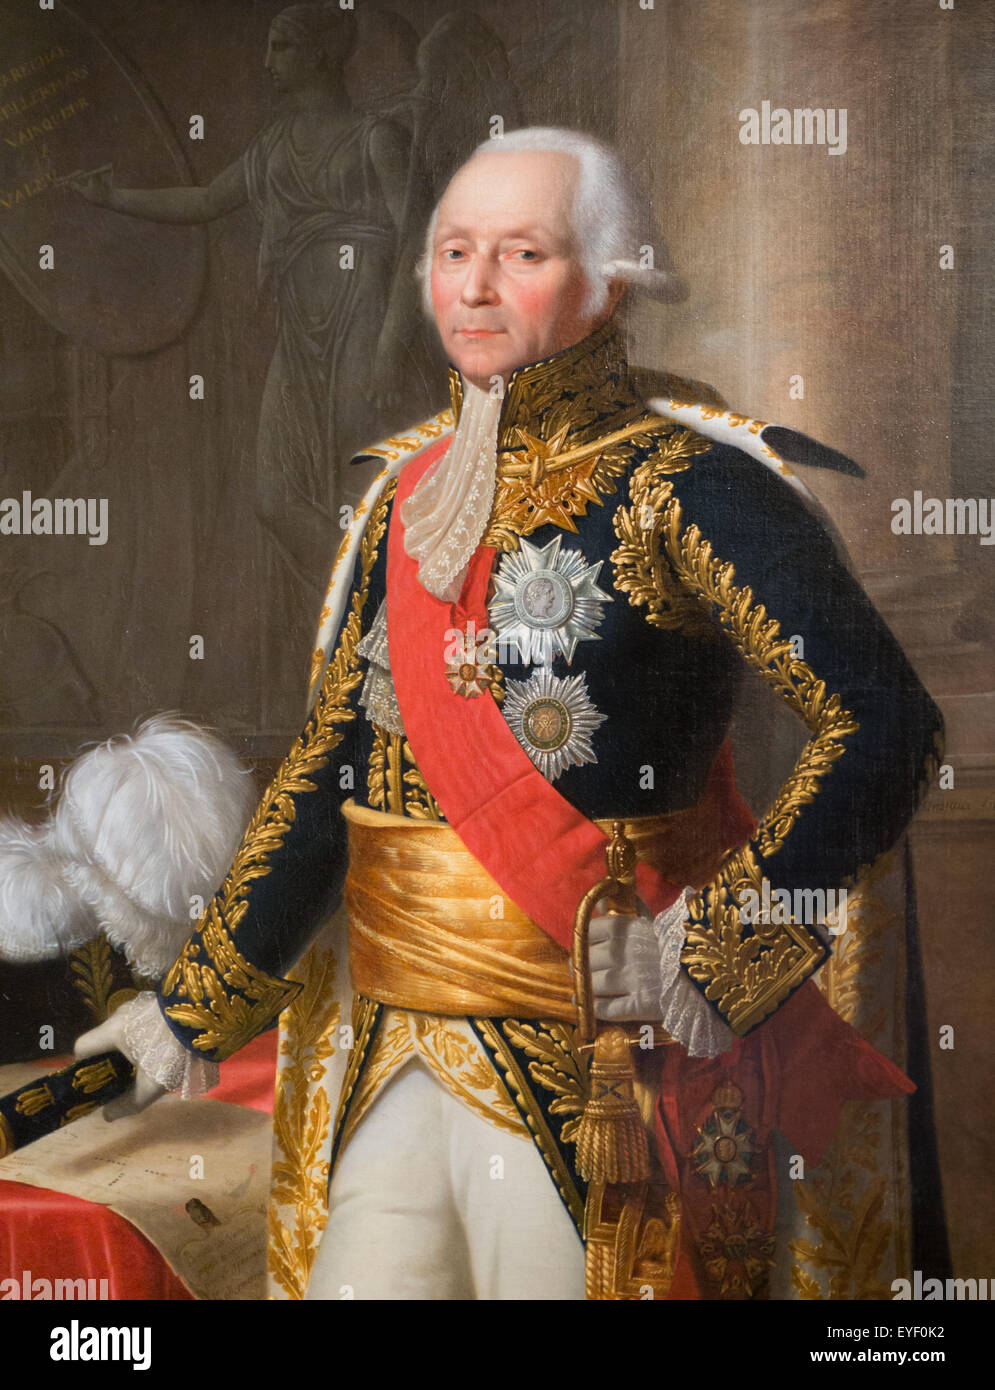 The Marshal Francois-Christophe Kellermann, Duke of Valmy 07/12/2013 - 19th century Collection Stock Photo